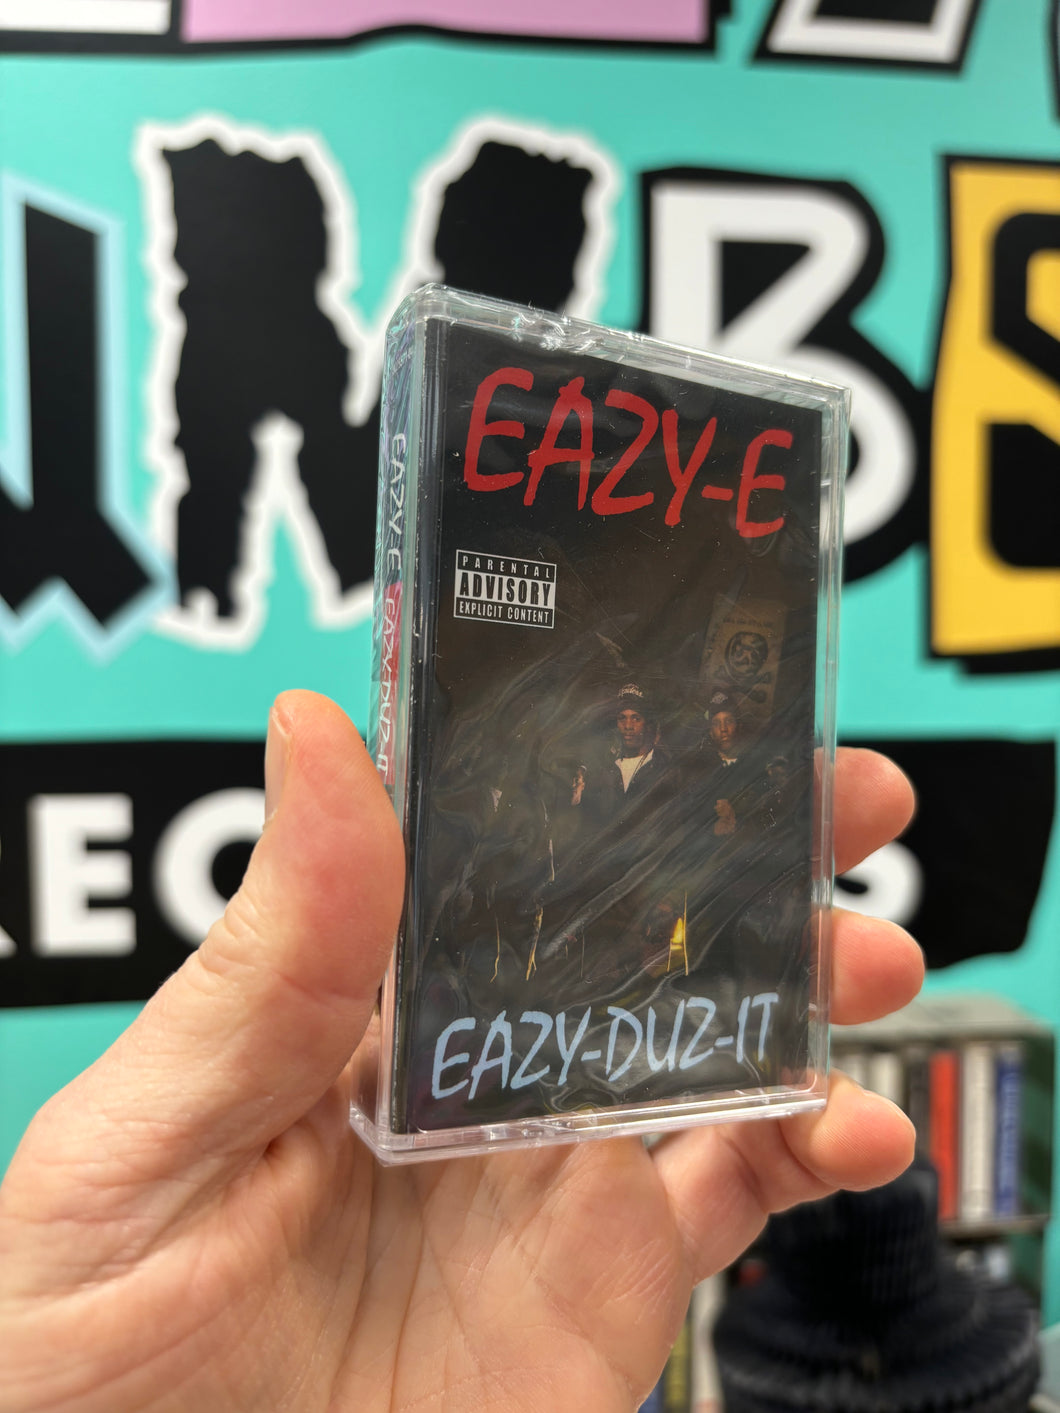 Eazy-E: Eazy-Duz-It, C-cassette, reissue, US 2013